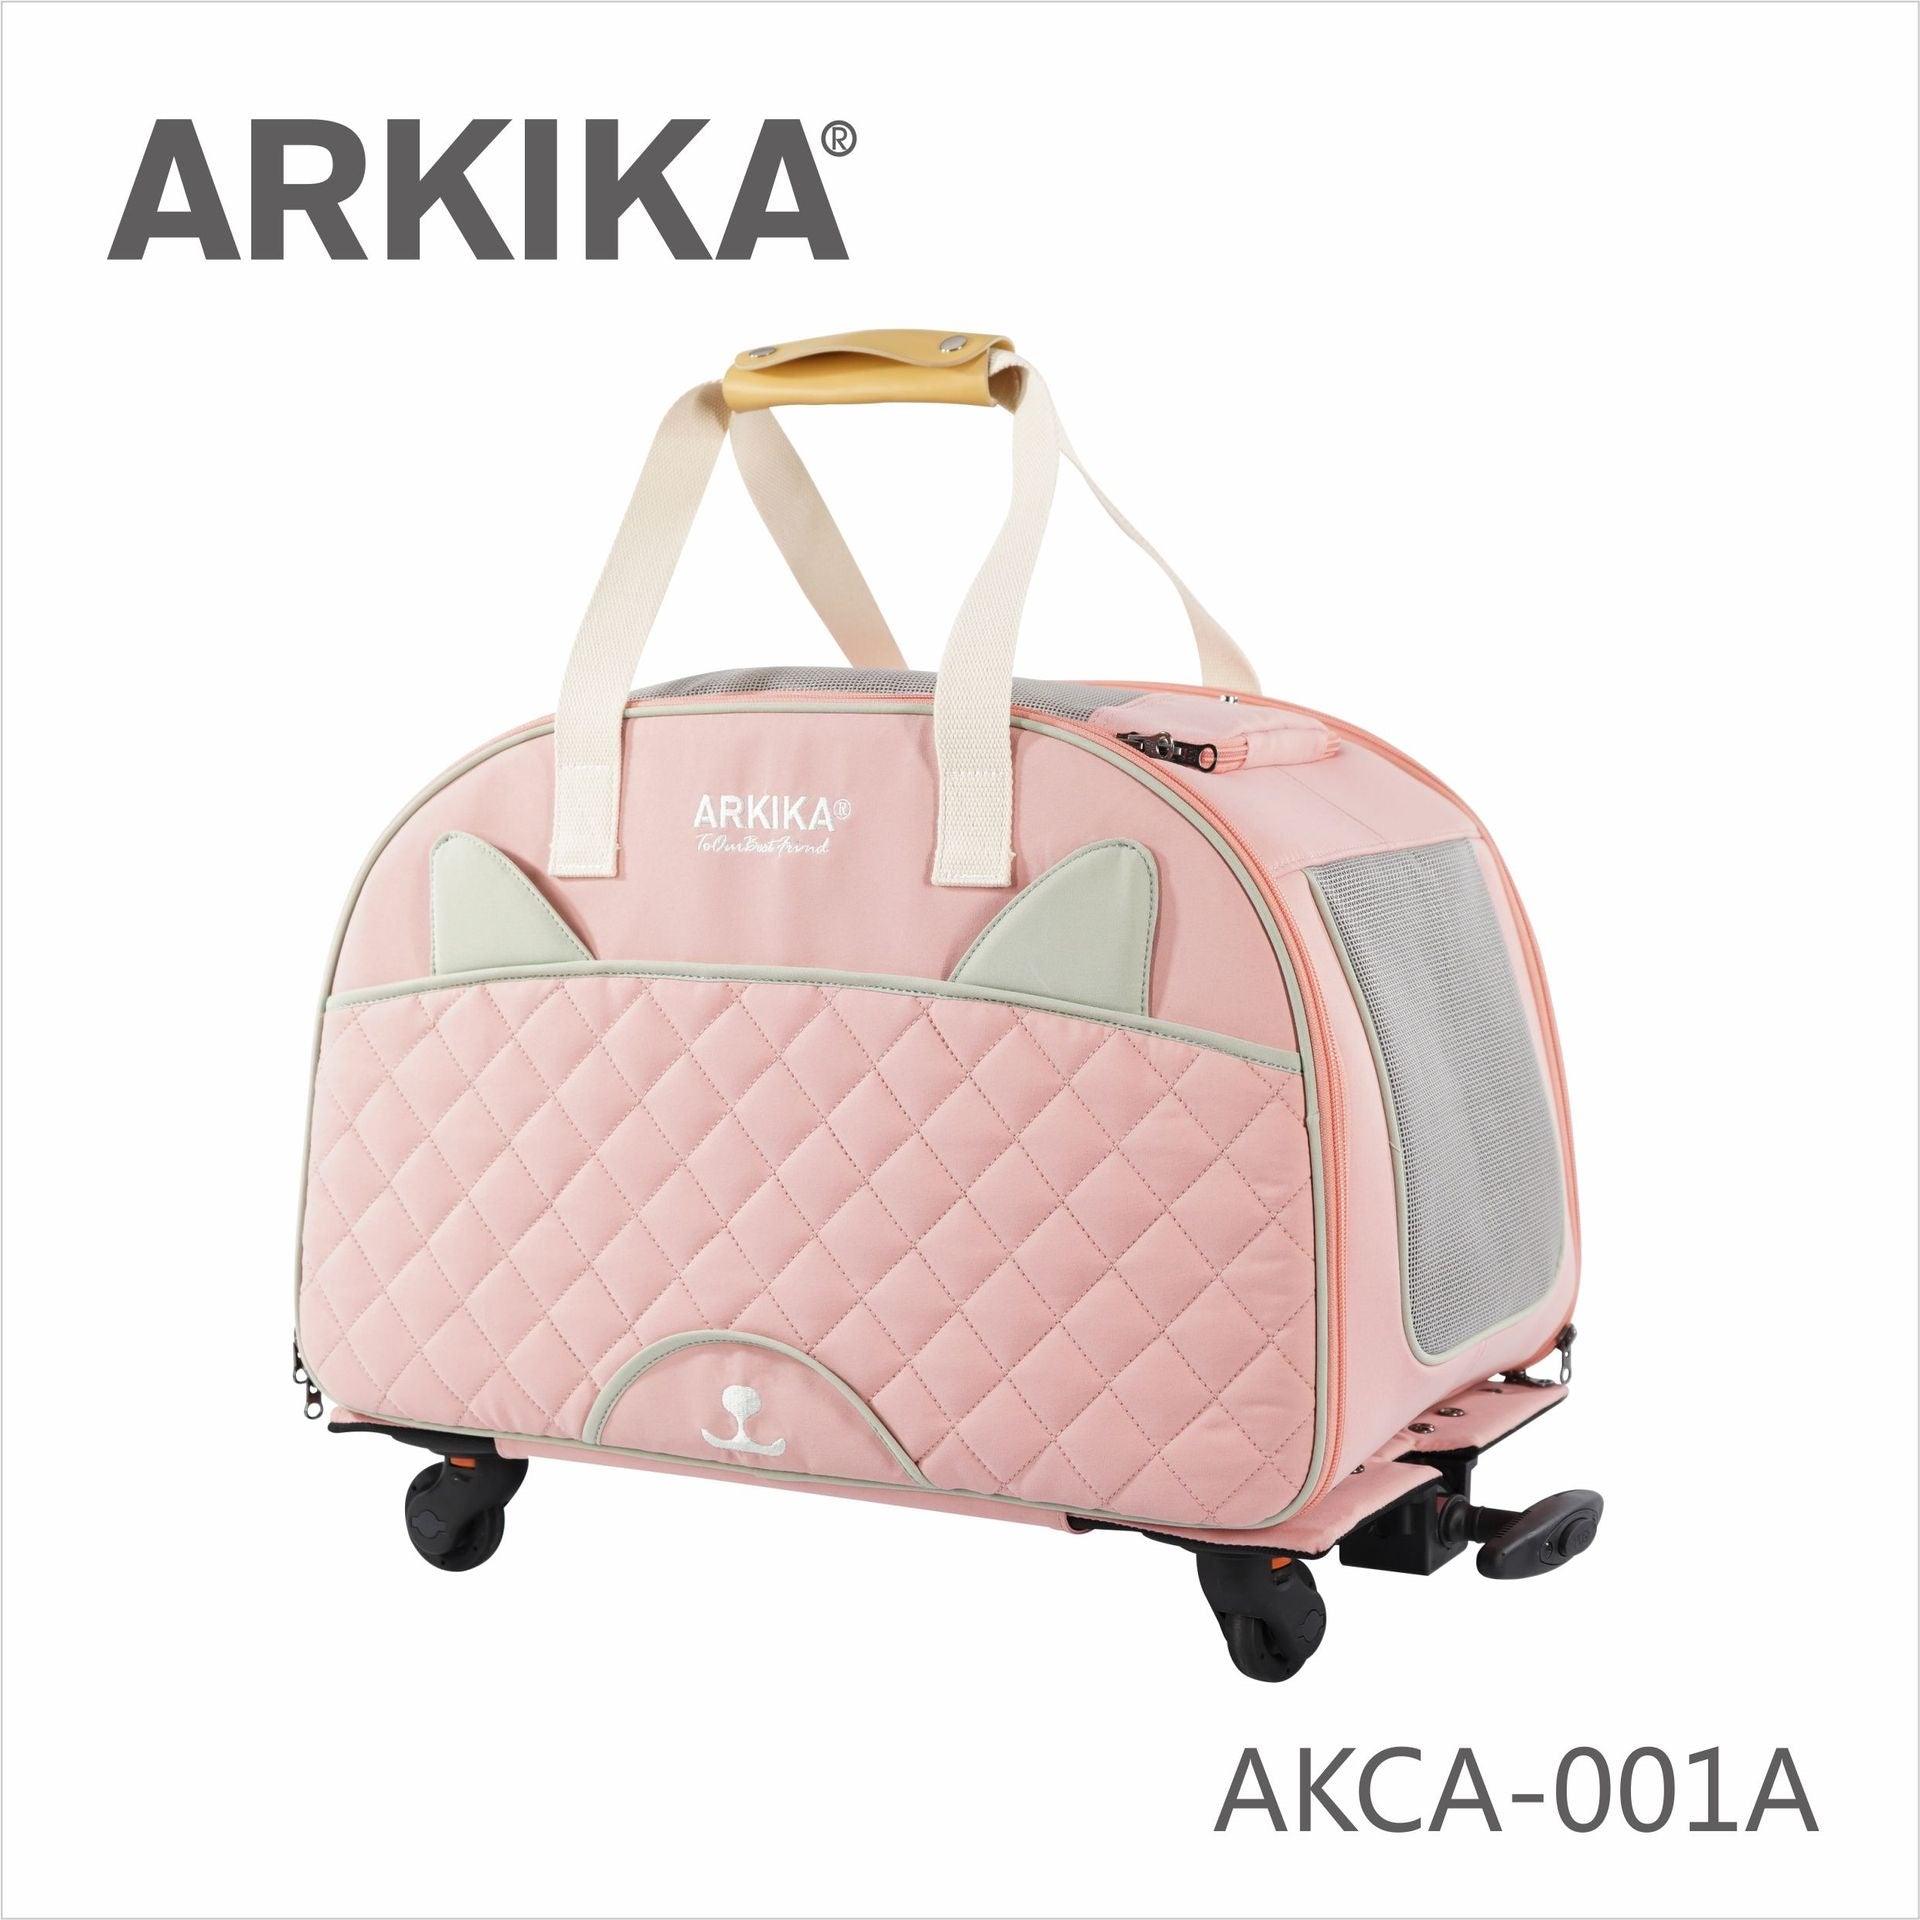 ARKIKA Pet Trolley - Pets Villa